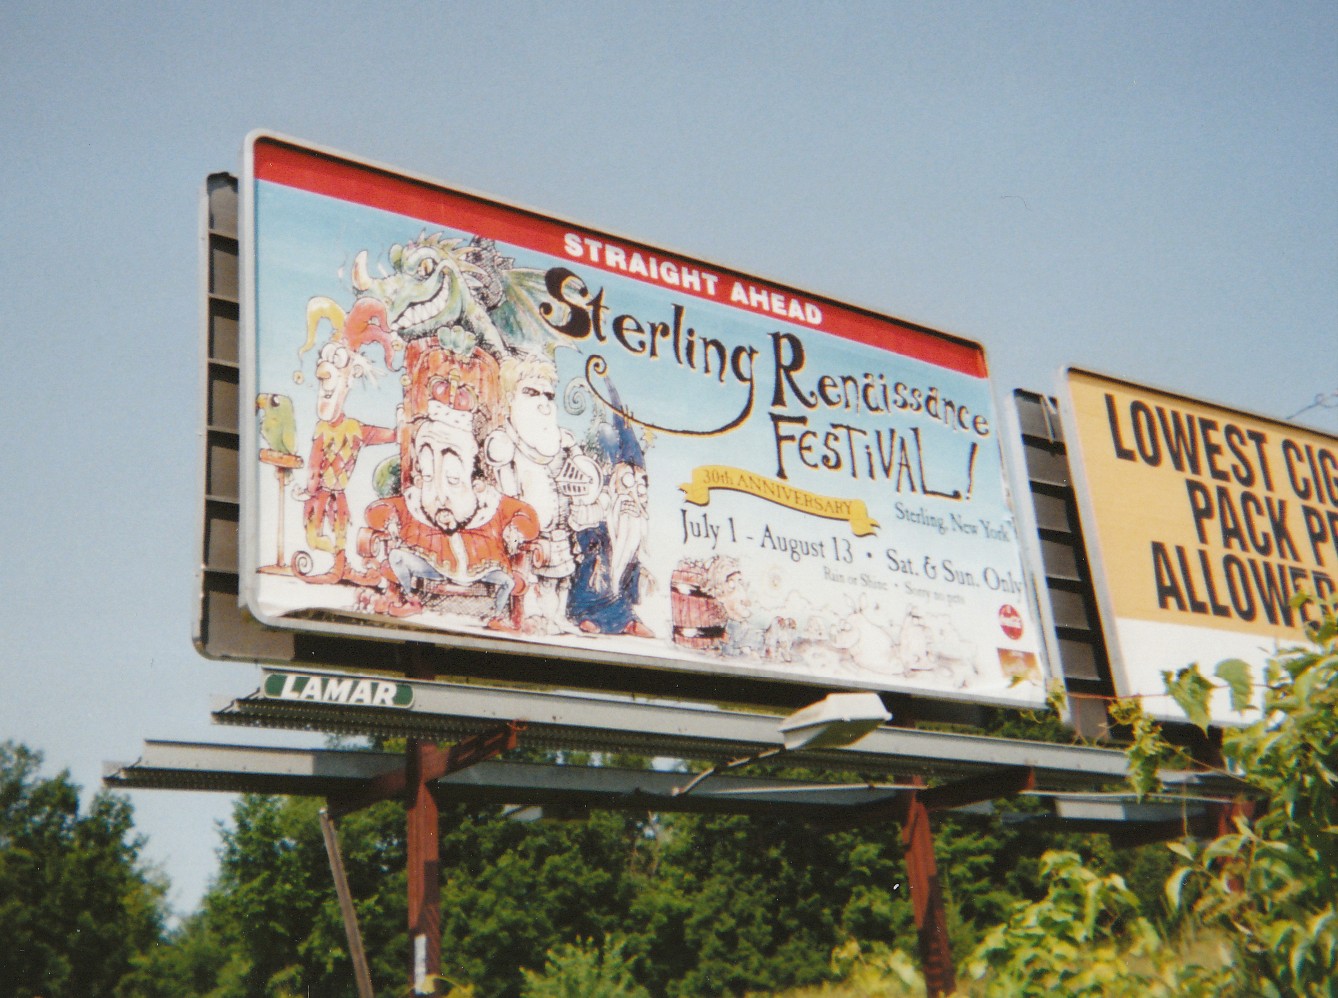 Sterling Renaissance Festival billboard